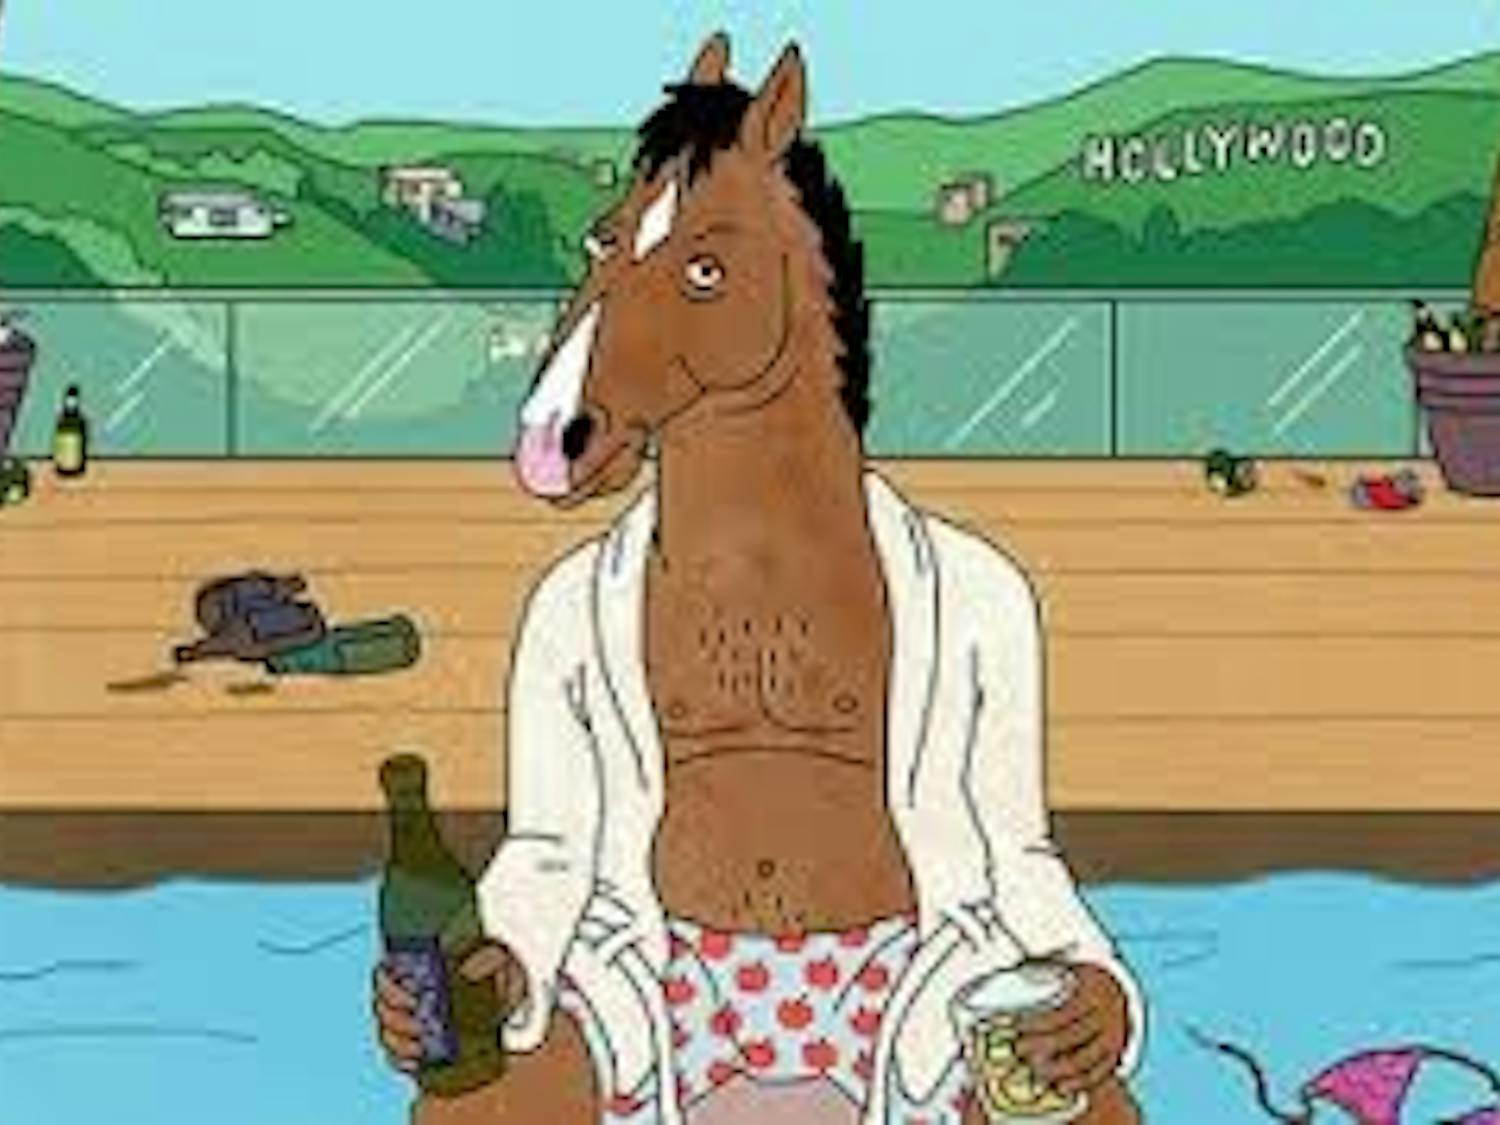 The third season of "BoJack Horseman" debuted on Netflix July 22.